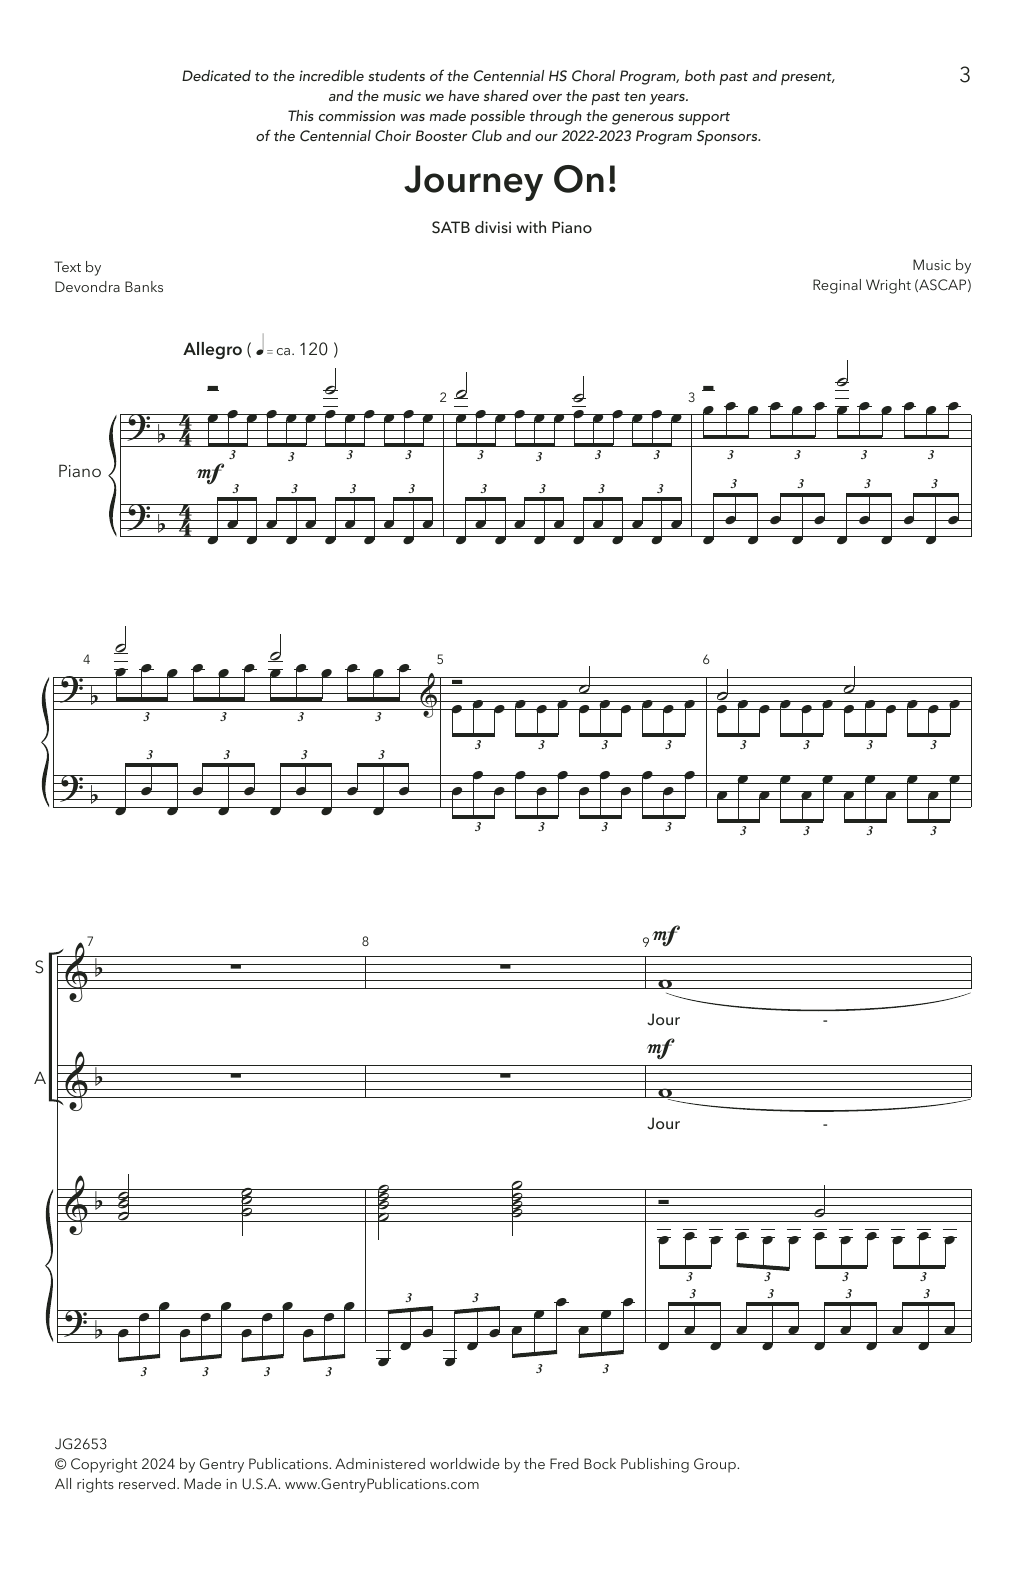 Reginal Wright Journey On! sheet music notes printable PDF score